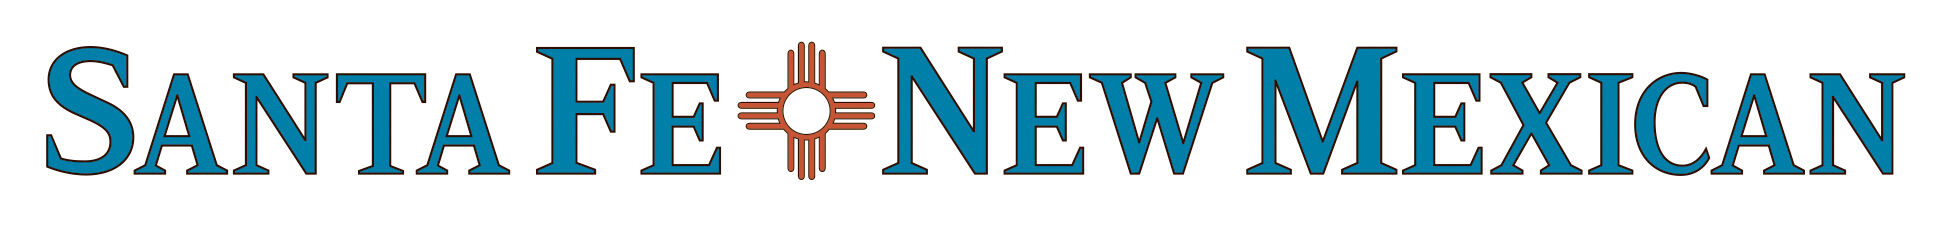 Santa Fe New Mexican logo